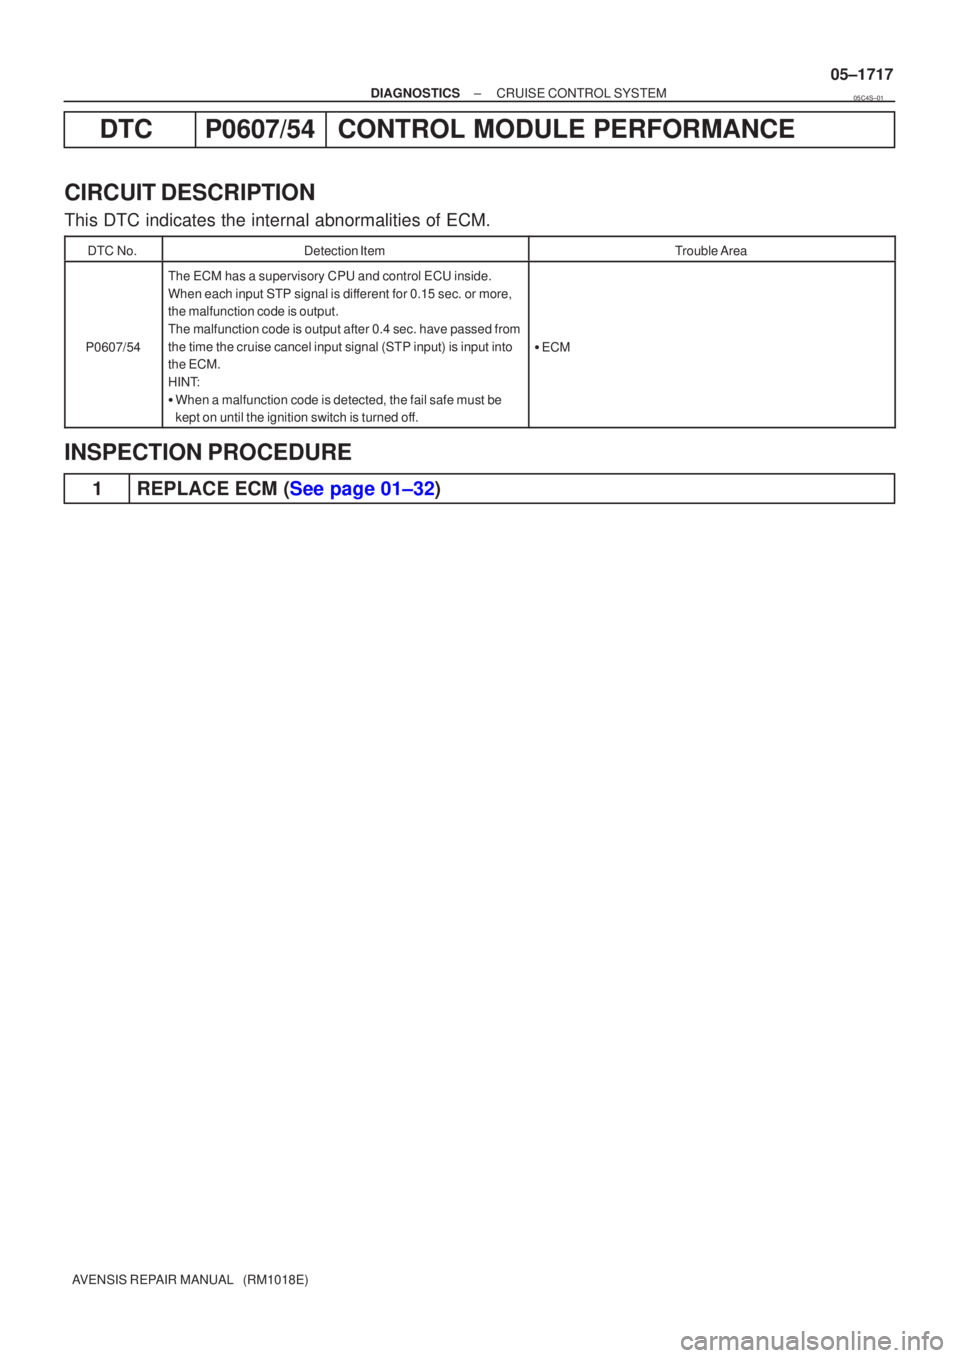 TOYOTA AVENSIS 2005  Service Repair Manual ±
DIAGNOSTICS CRUISE CONTROL SYSTEM
05±1717
AVENSIS REPAIR MANUAL   (RM1018E)
DTC P0607/54 CONTROL MODULE PERFORMANCE
CIRCUIT DESCRIPTION
This DTC indicates the internal abnormalities of ECM.
DTC No